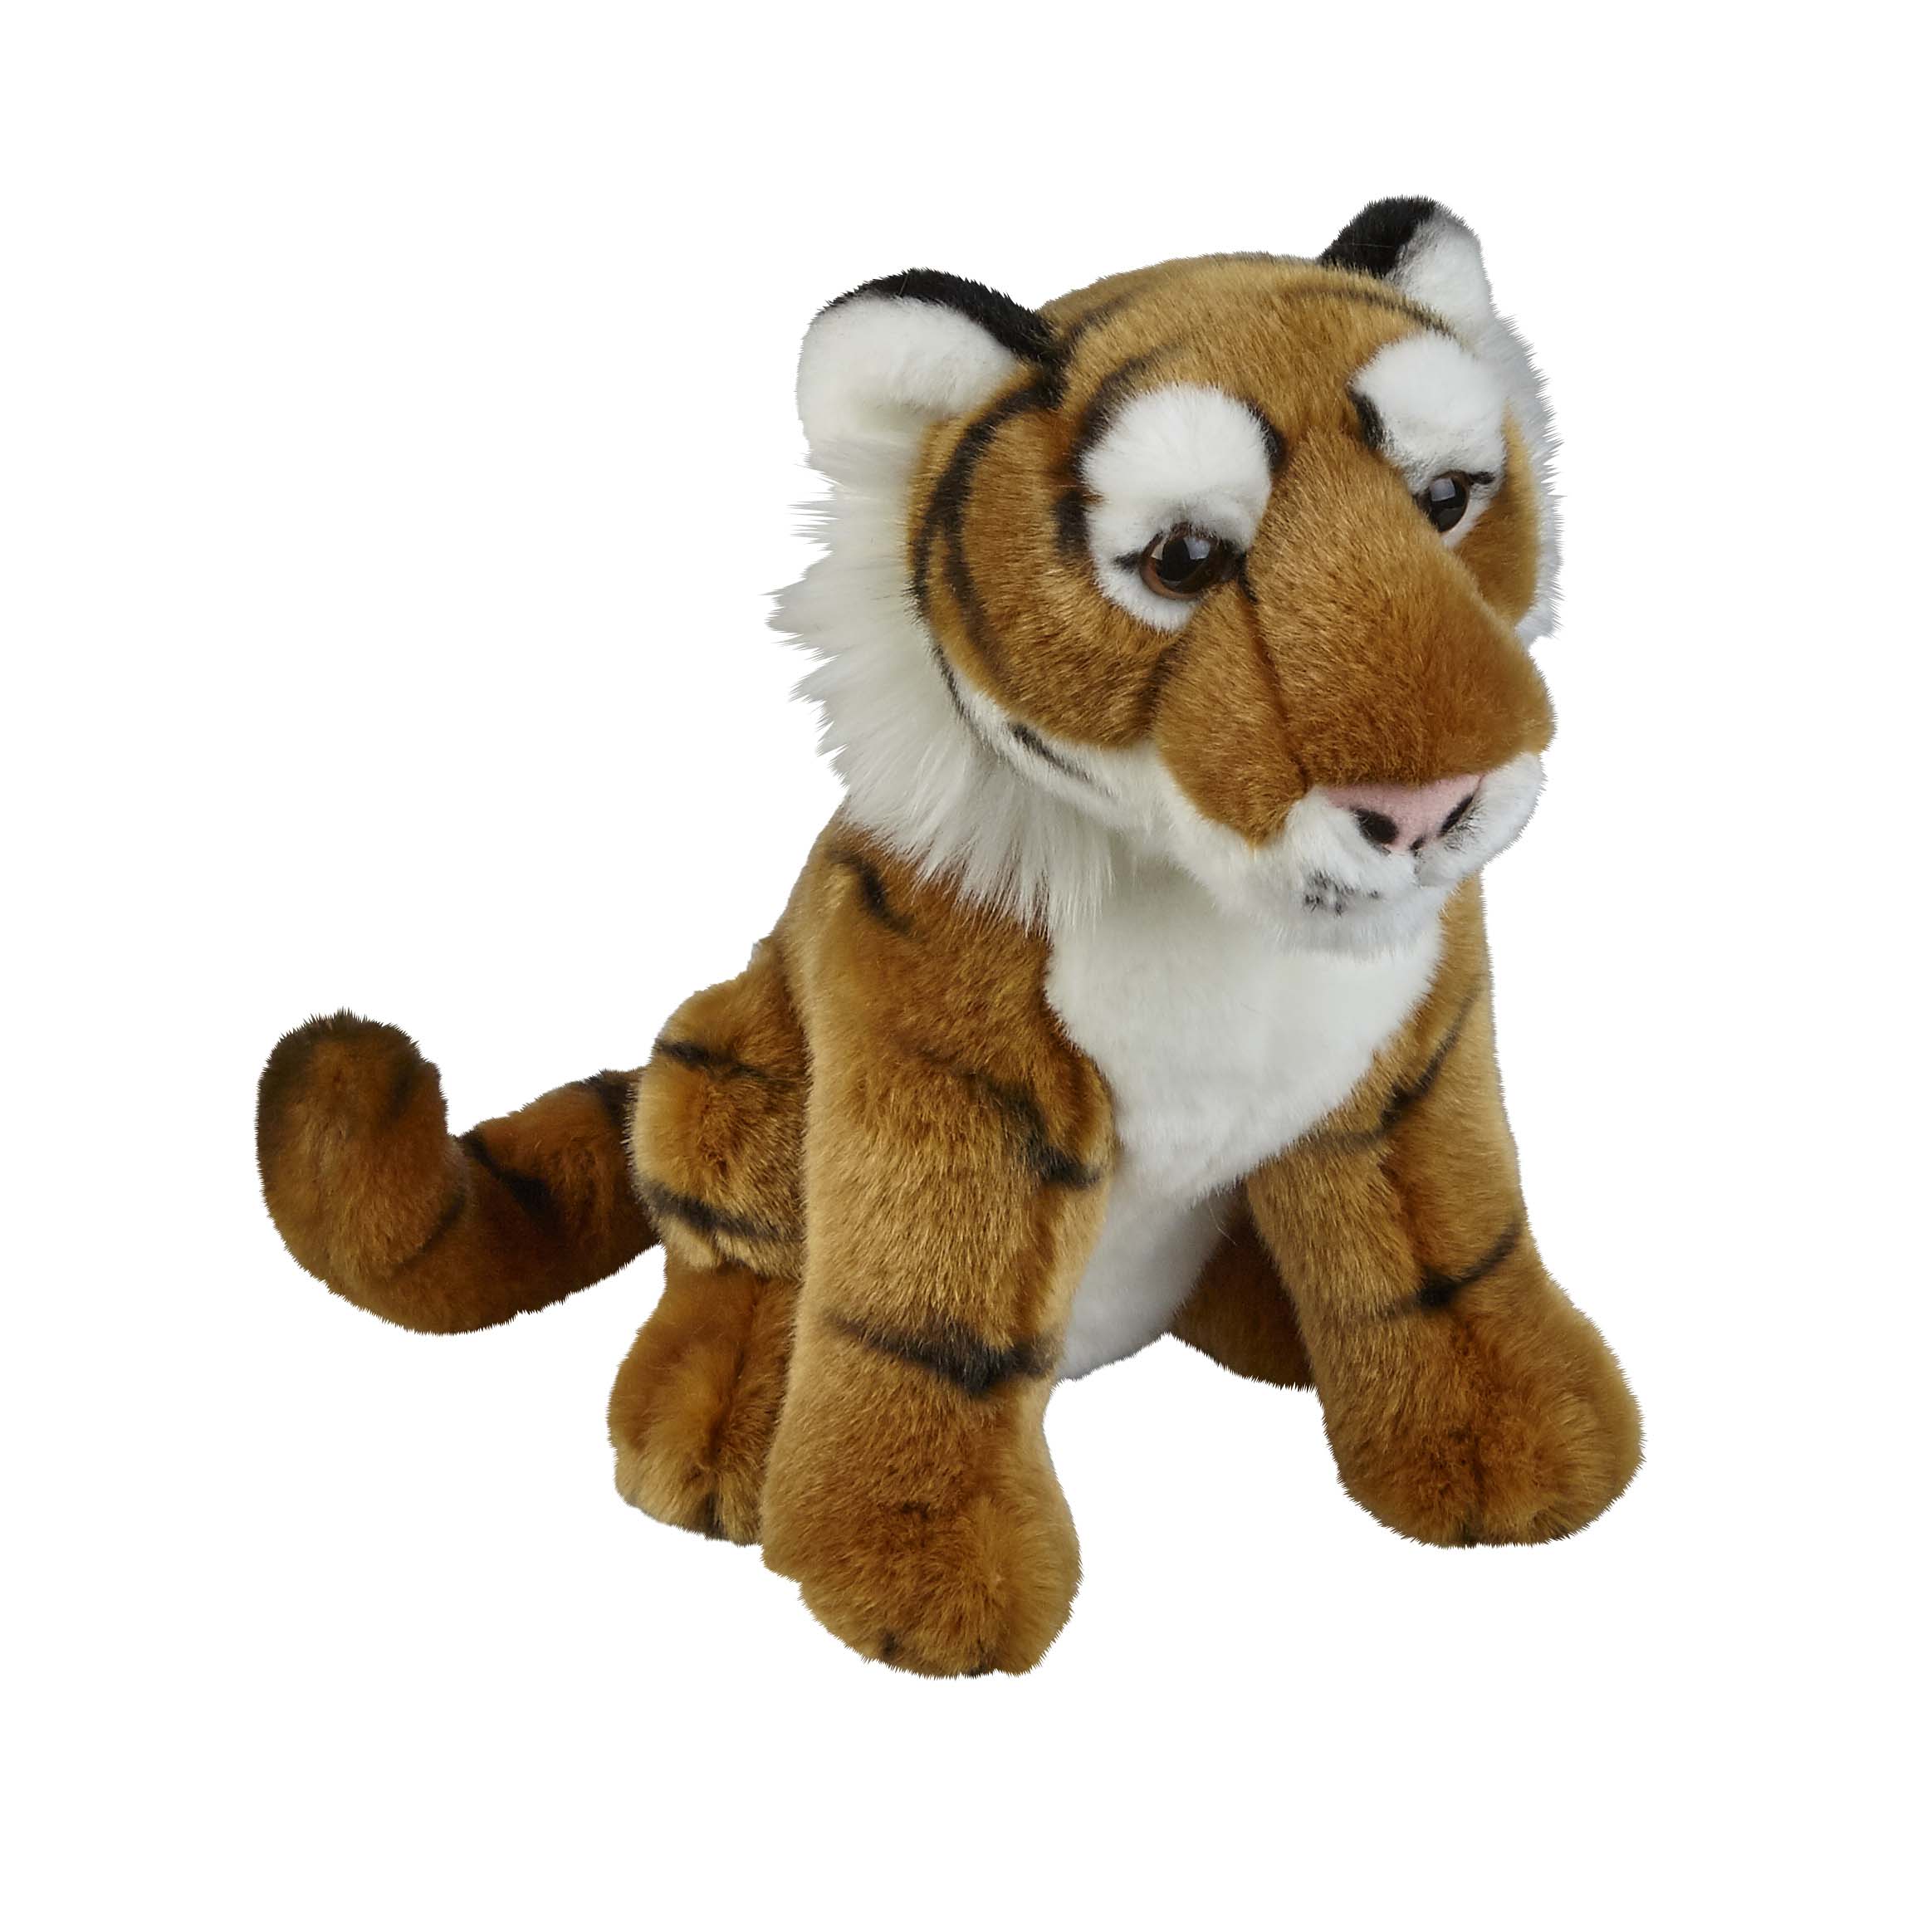 Toy Tiger For Safari Centres